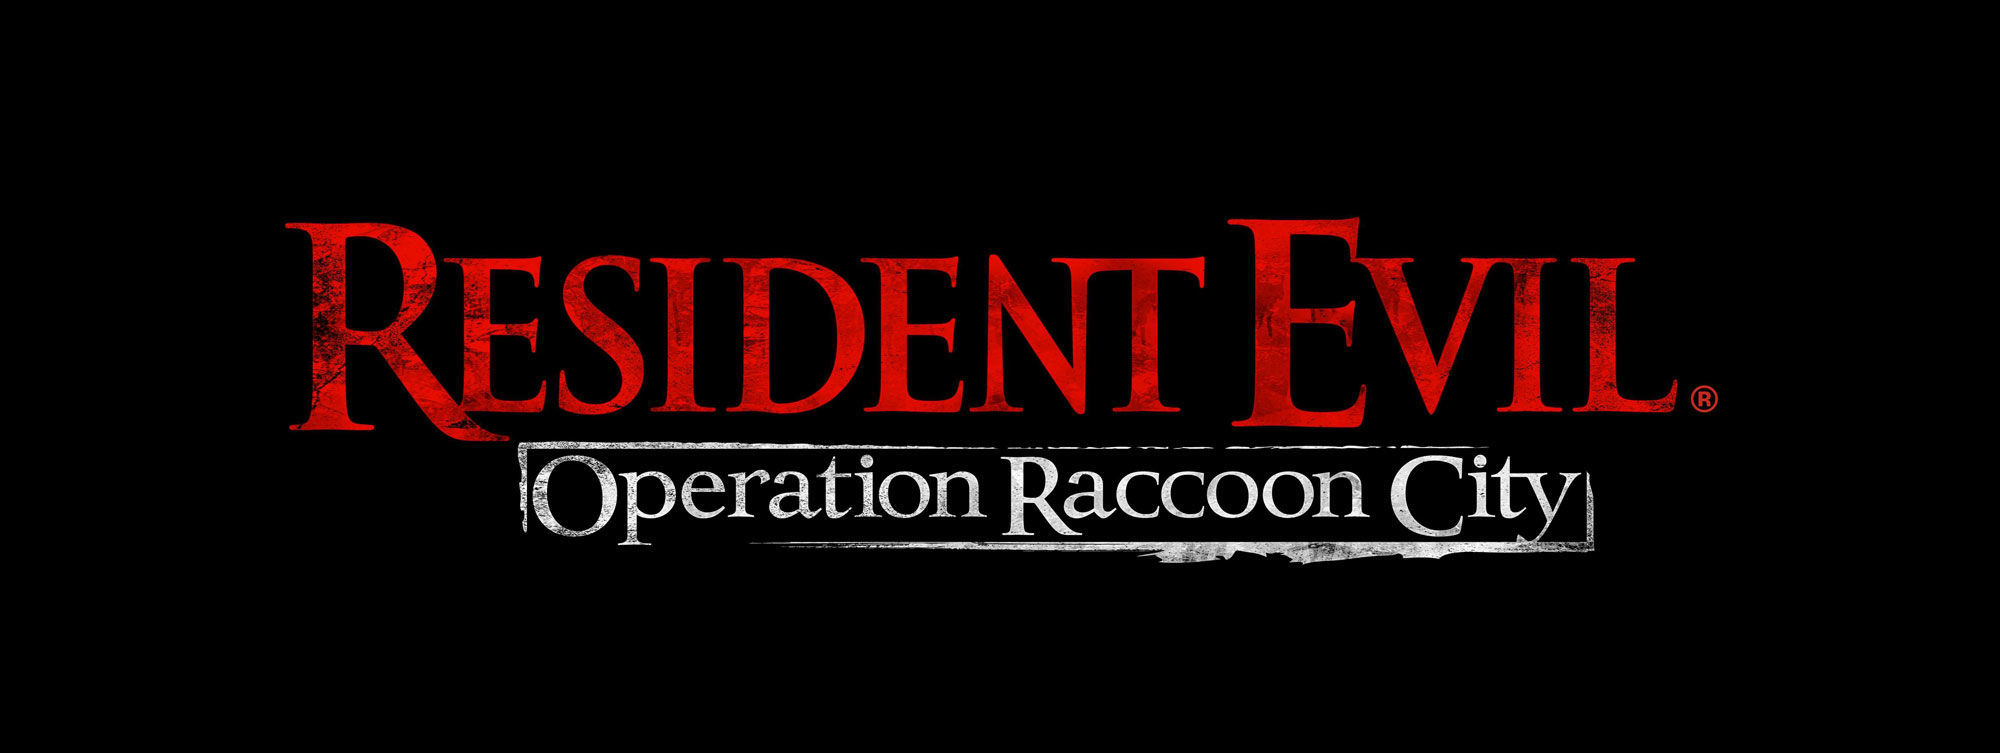 Capcom: Resident Evil &quot; tiene que resolver sus propios problemas”